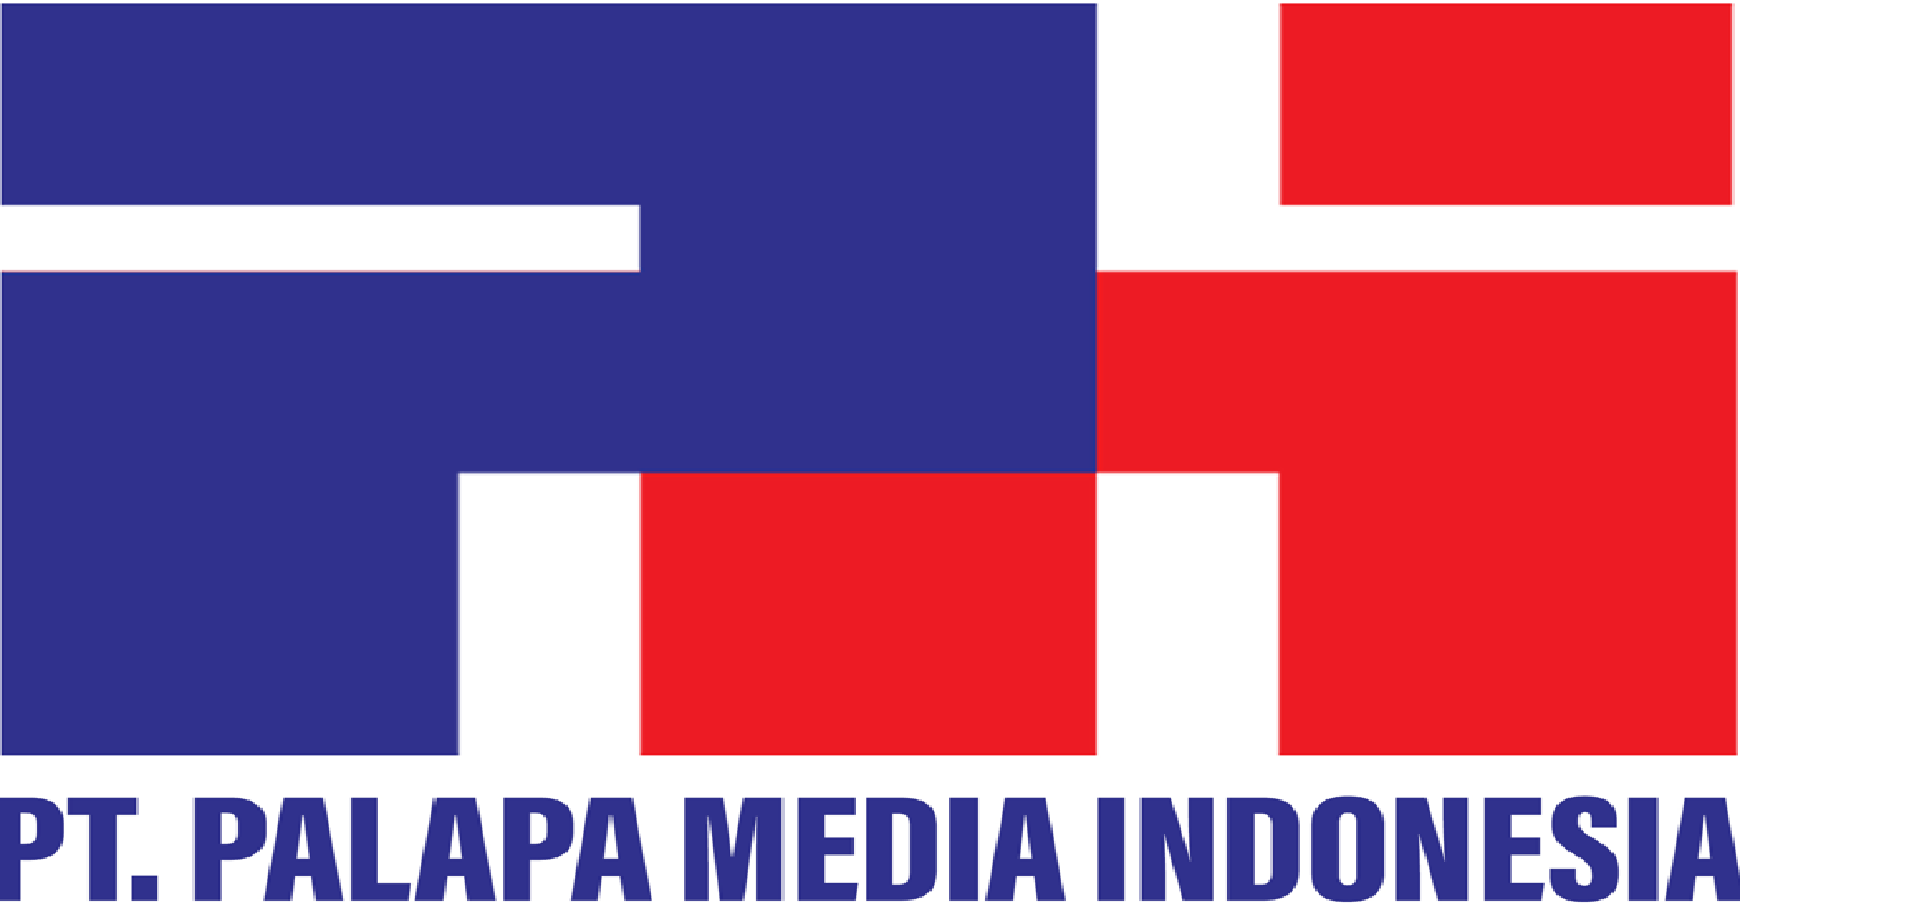 PT. PALAPA MEDIA INDONESIA